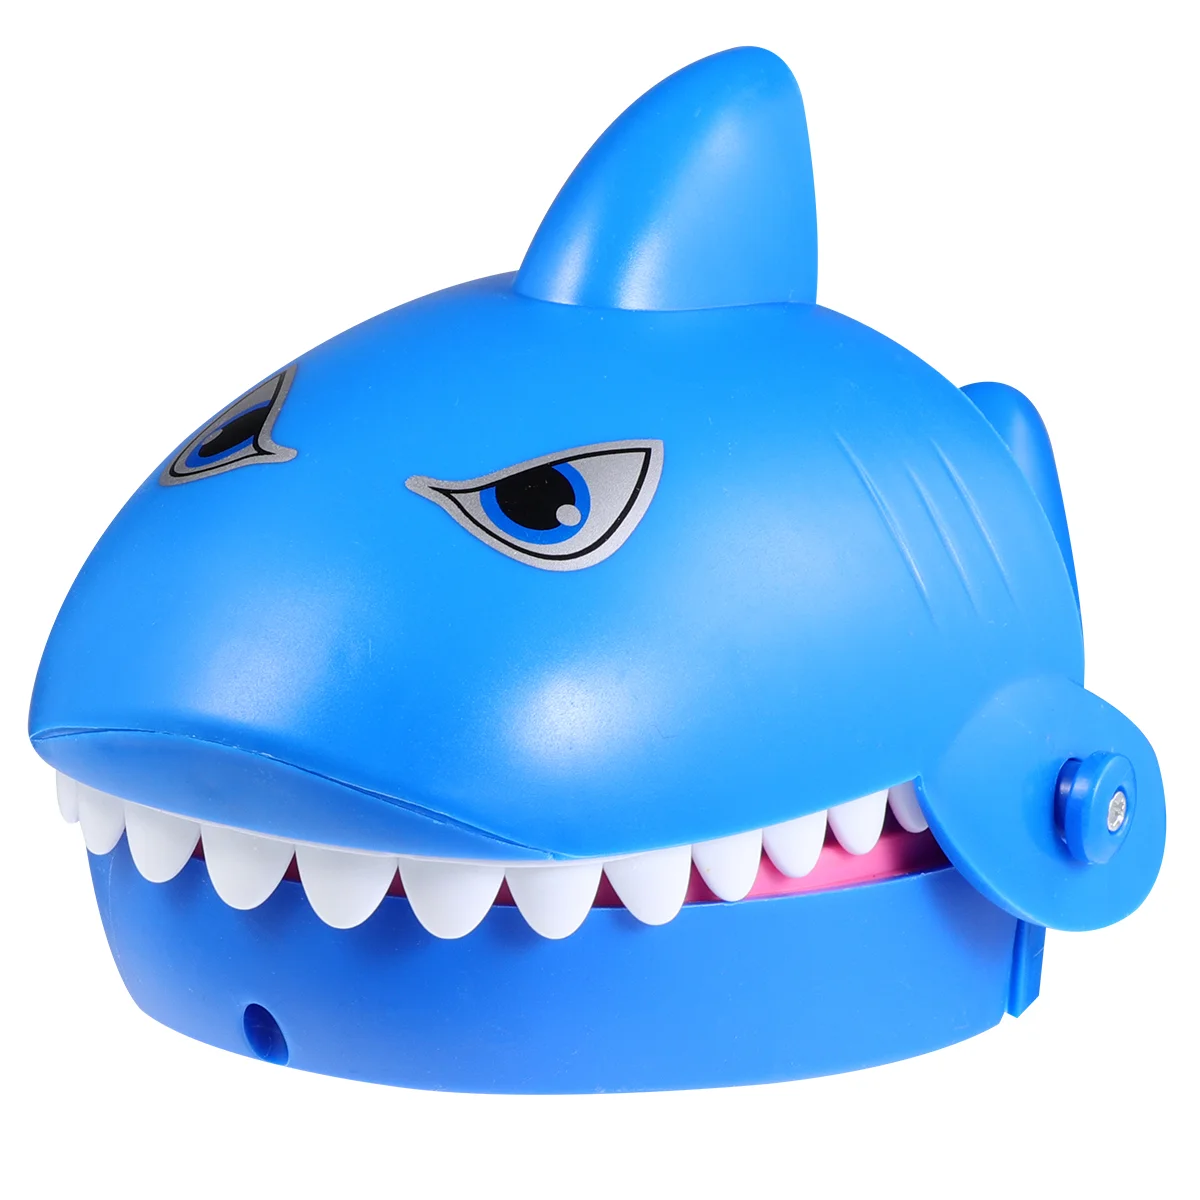 

Game Dentist Toys Toy Biting Finger Kids Joke Trick Stuffers Goodie Rewards Classroom Filler Treasure Figures Ocean Prizes